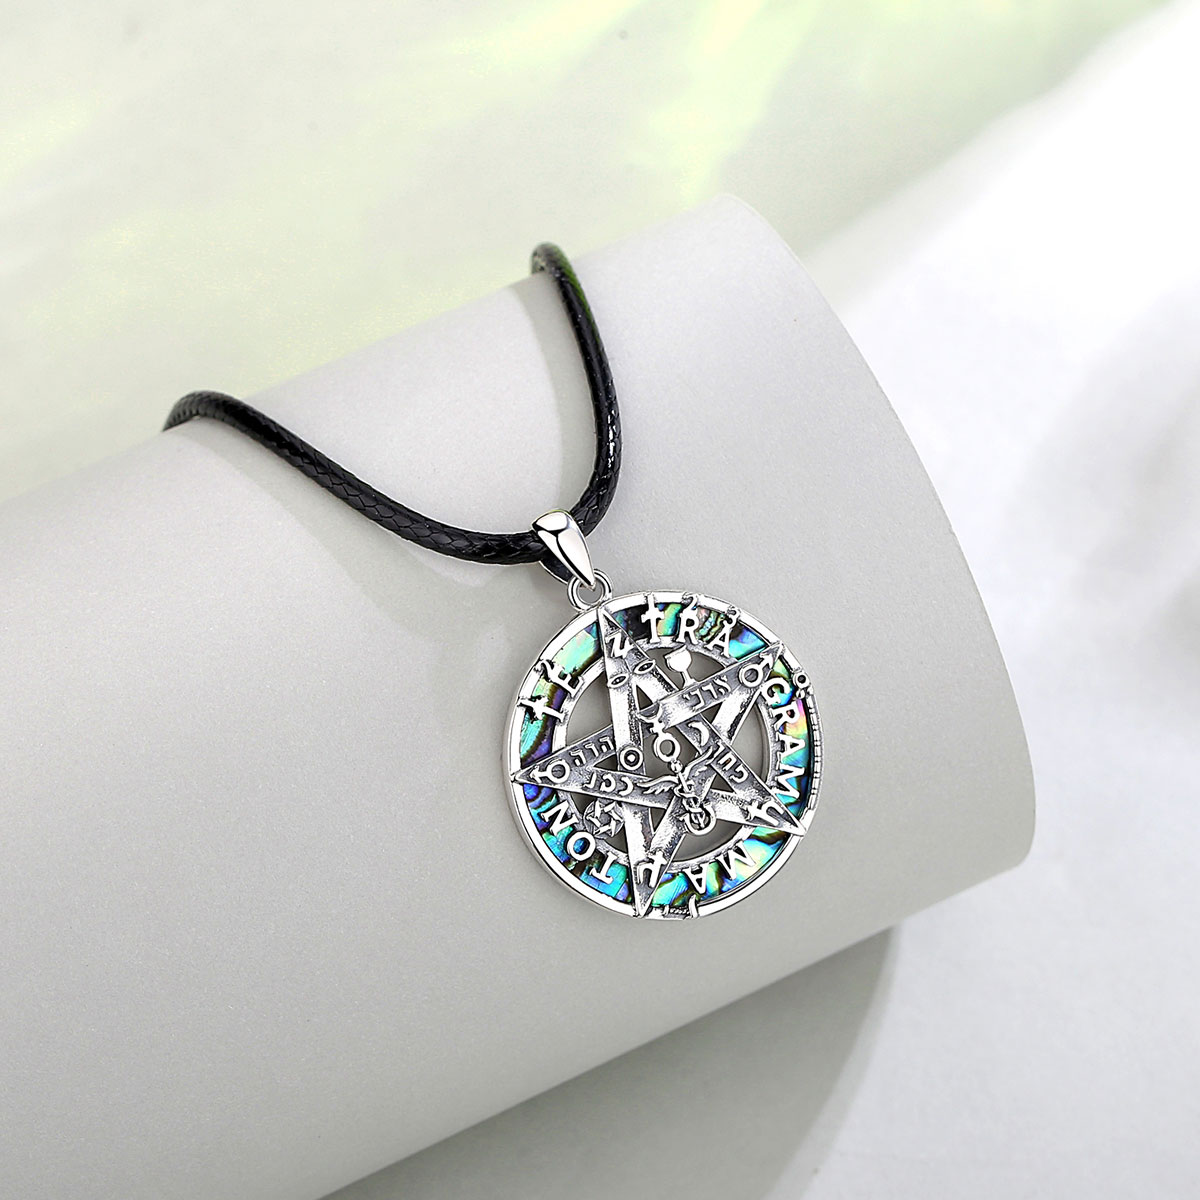 Merryshine 925 sterling silver viking jewelry tetragrammaton pentagram pendant necklace with abalone shell